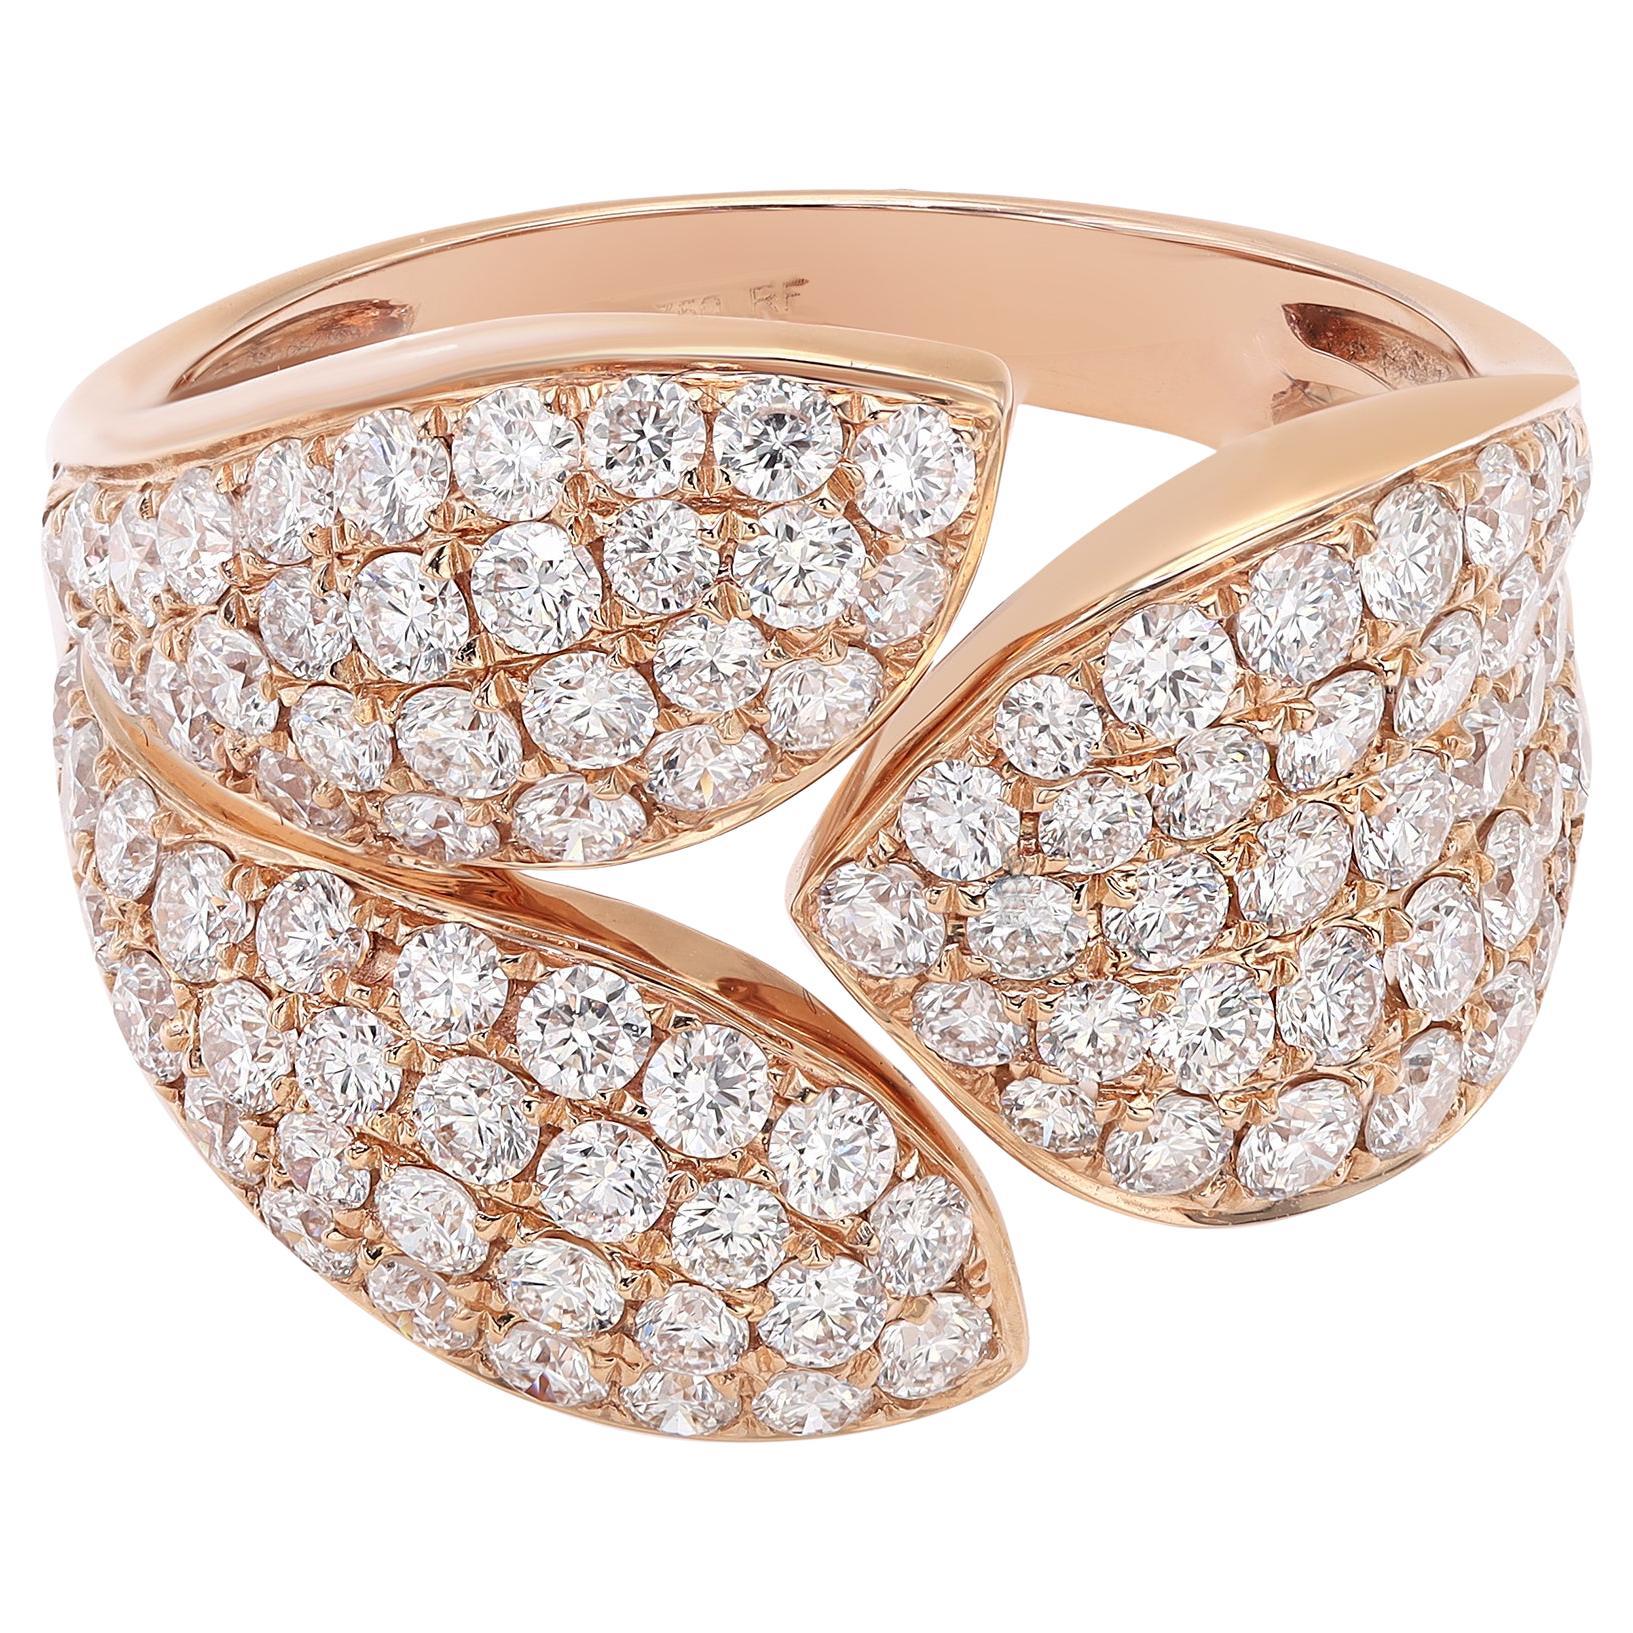 Rachel Koen Pave Set Round Cut Diamond Ring 18K Rose Gold 2.00Cttw For Sale